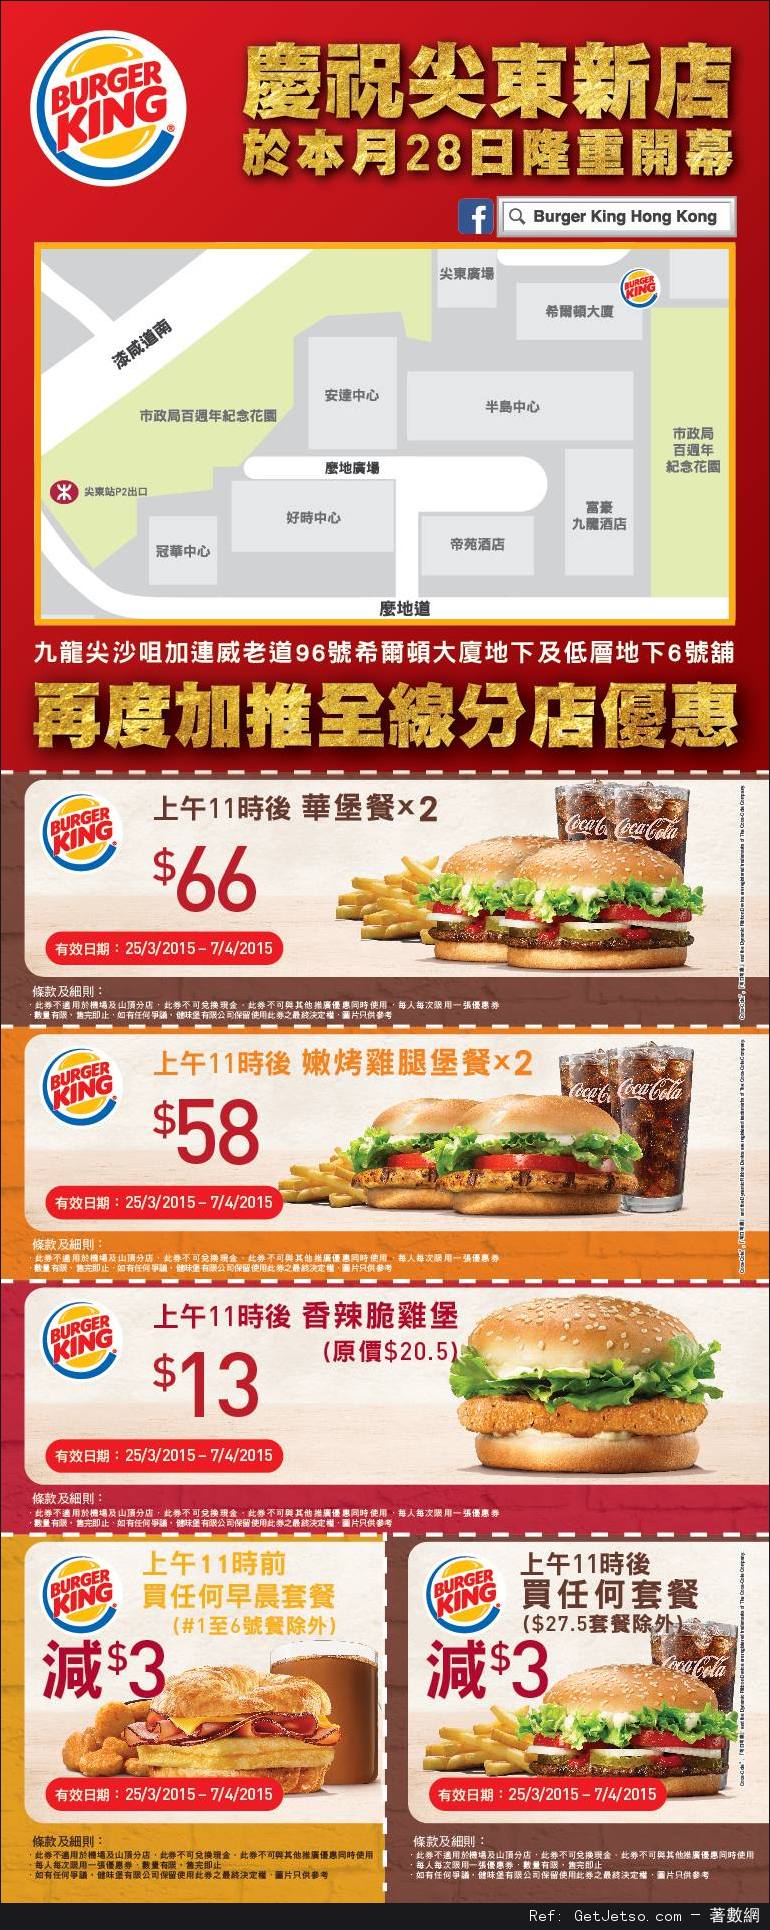 Burger King 美食優惠券(至15年4月7日)圖片1